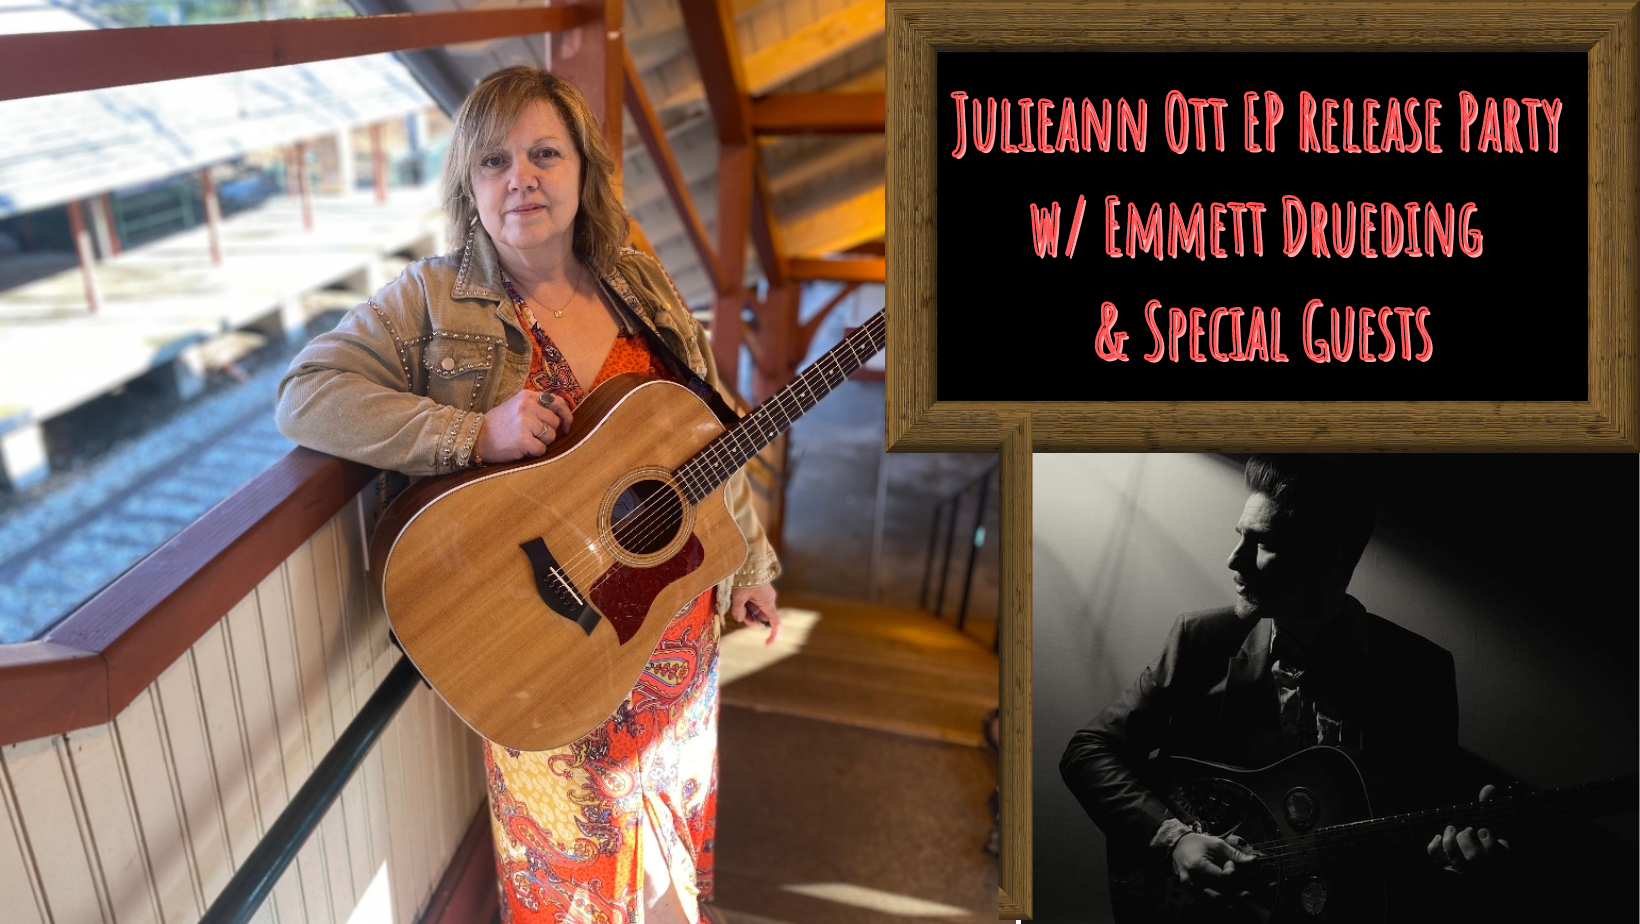 SUN. APR. 23: Julieann Ott EP Release Party w/ Emmett Drueding & Special Guests